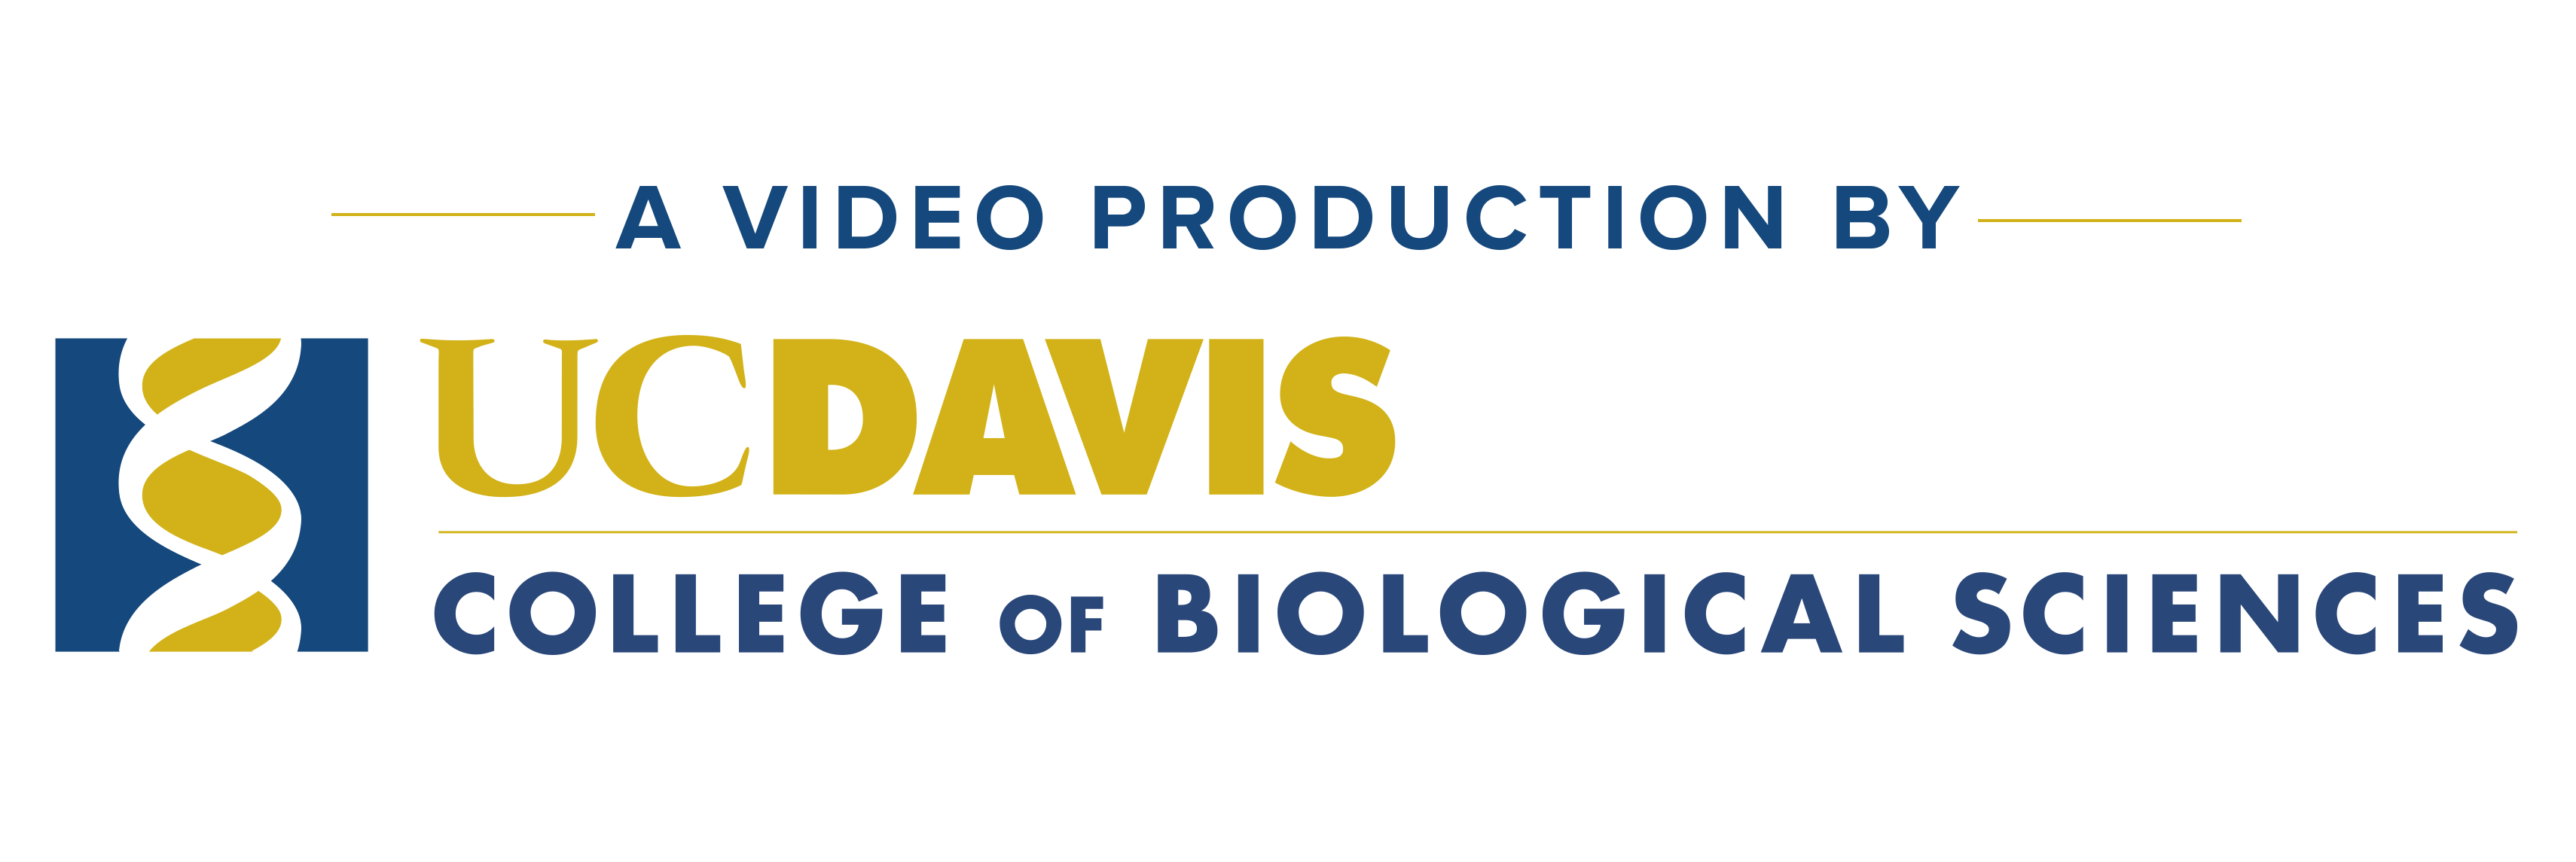 Video production logo